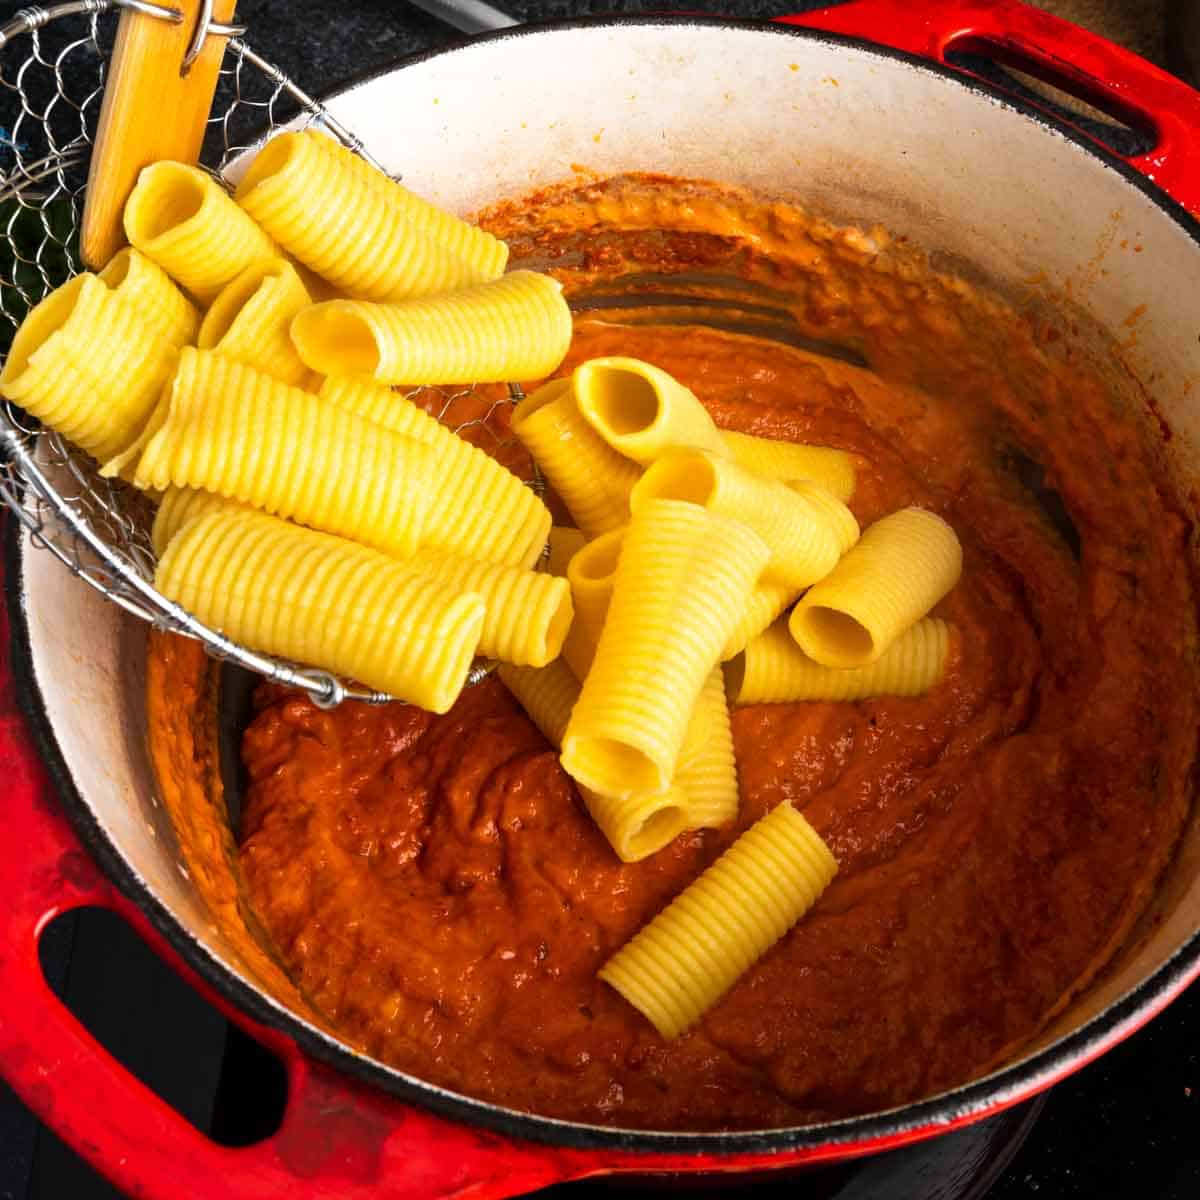 Dumping boiled rigatoni into a big pot of sauce